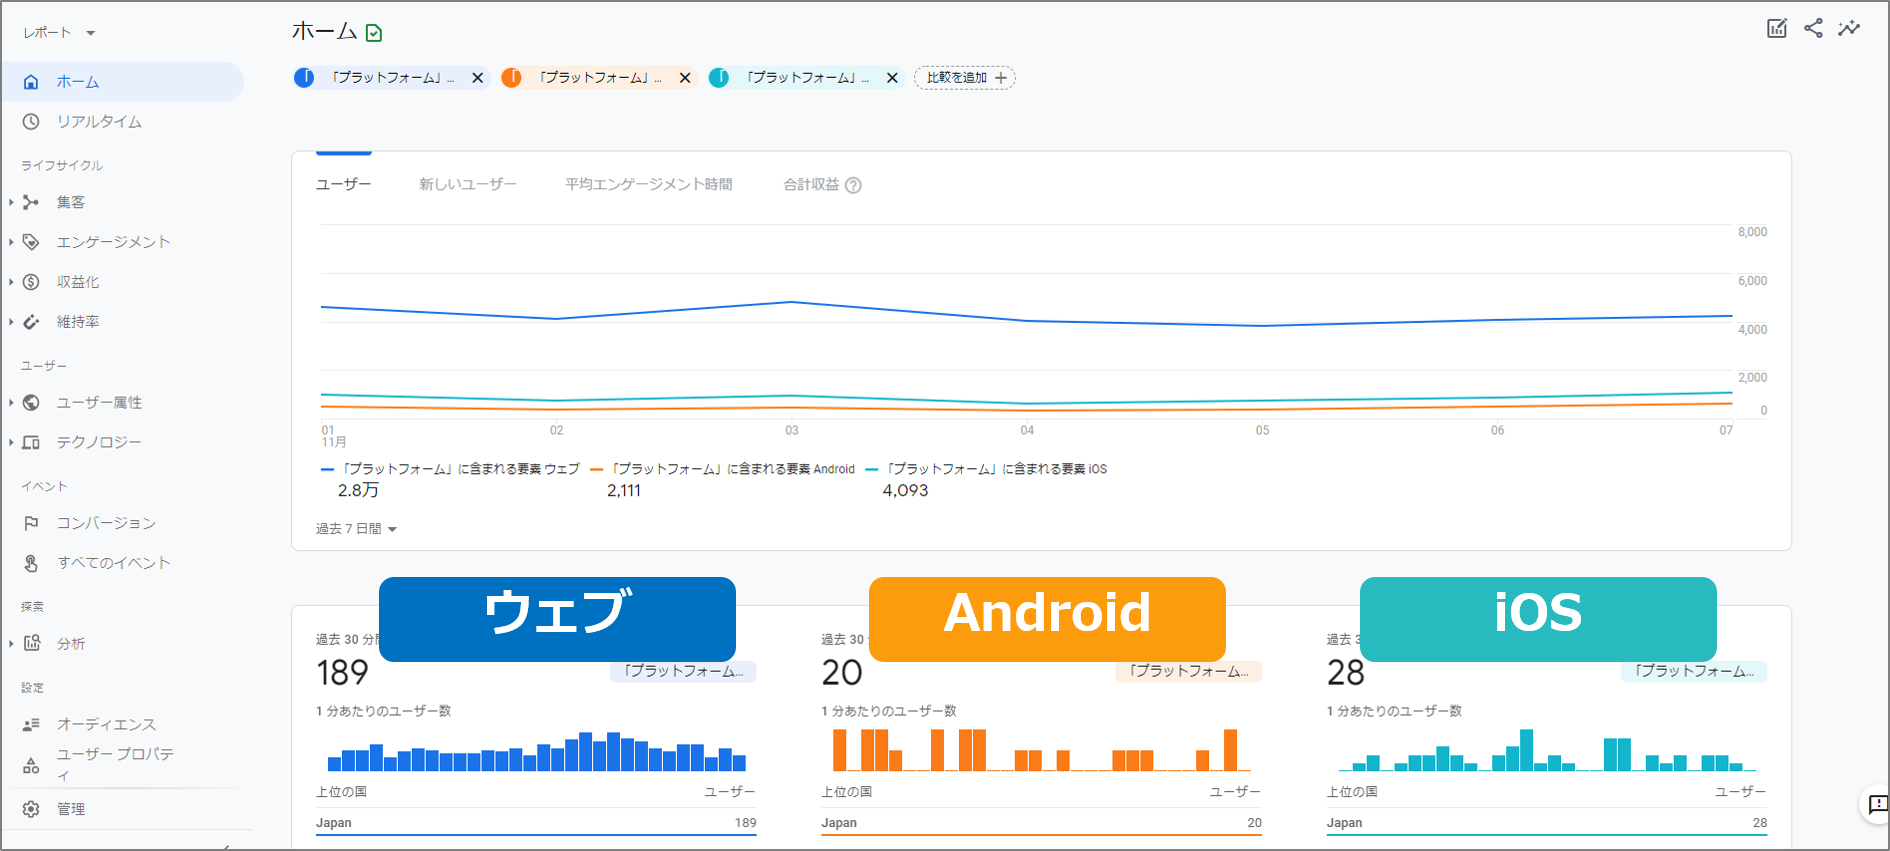 obr-jap-google-analytics